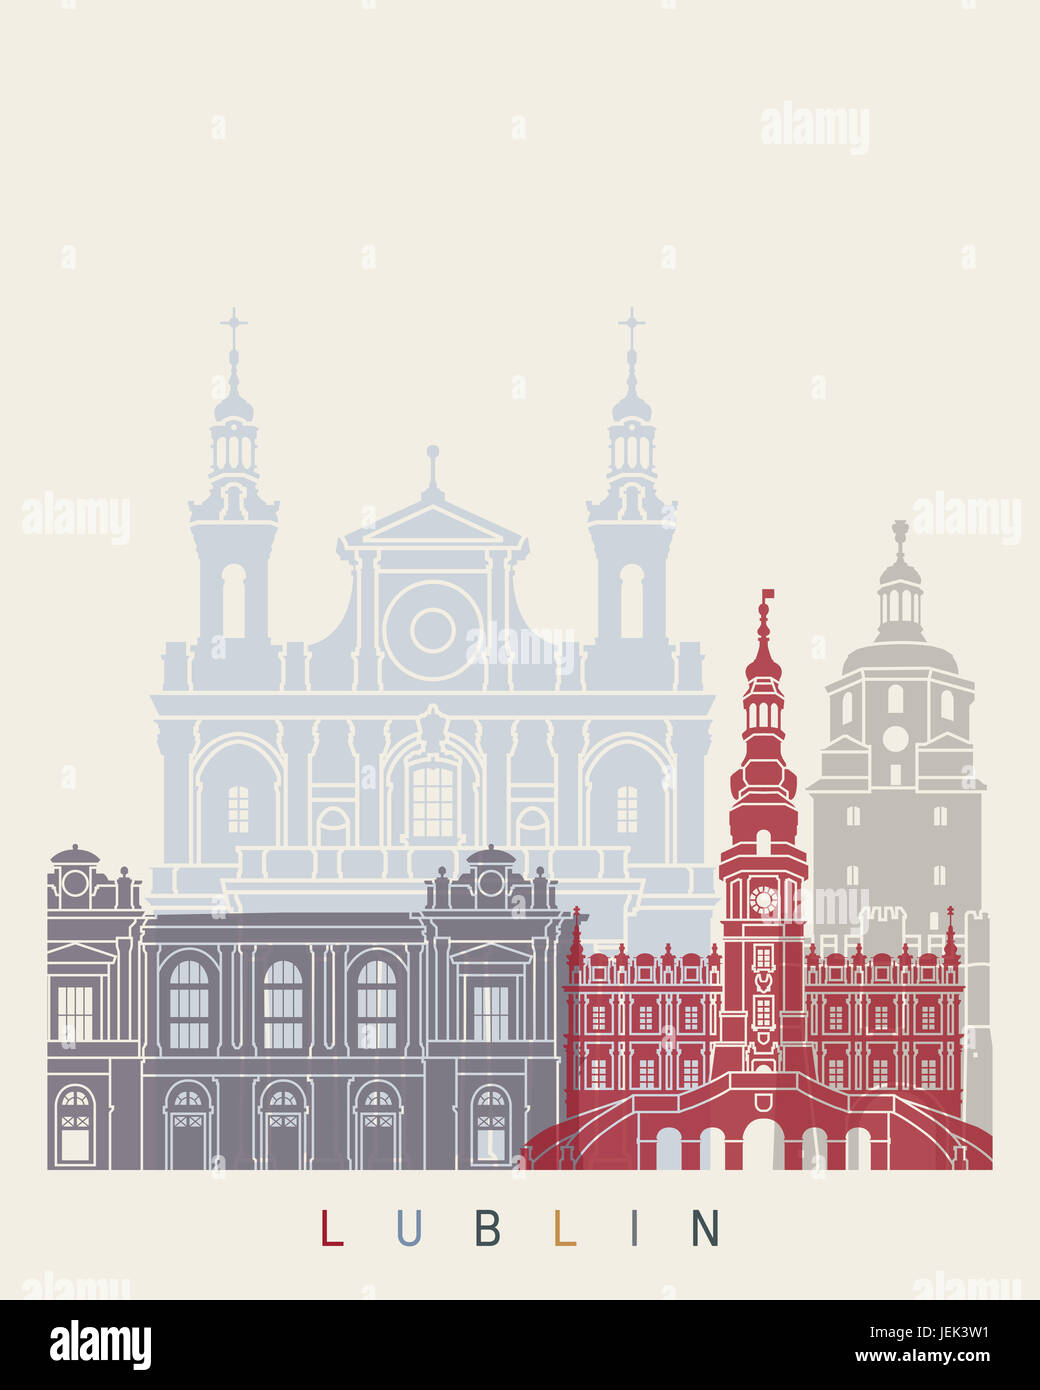 Lublin skyline poster in editable vector file Stock Photo